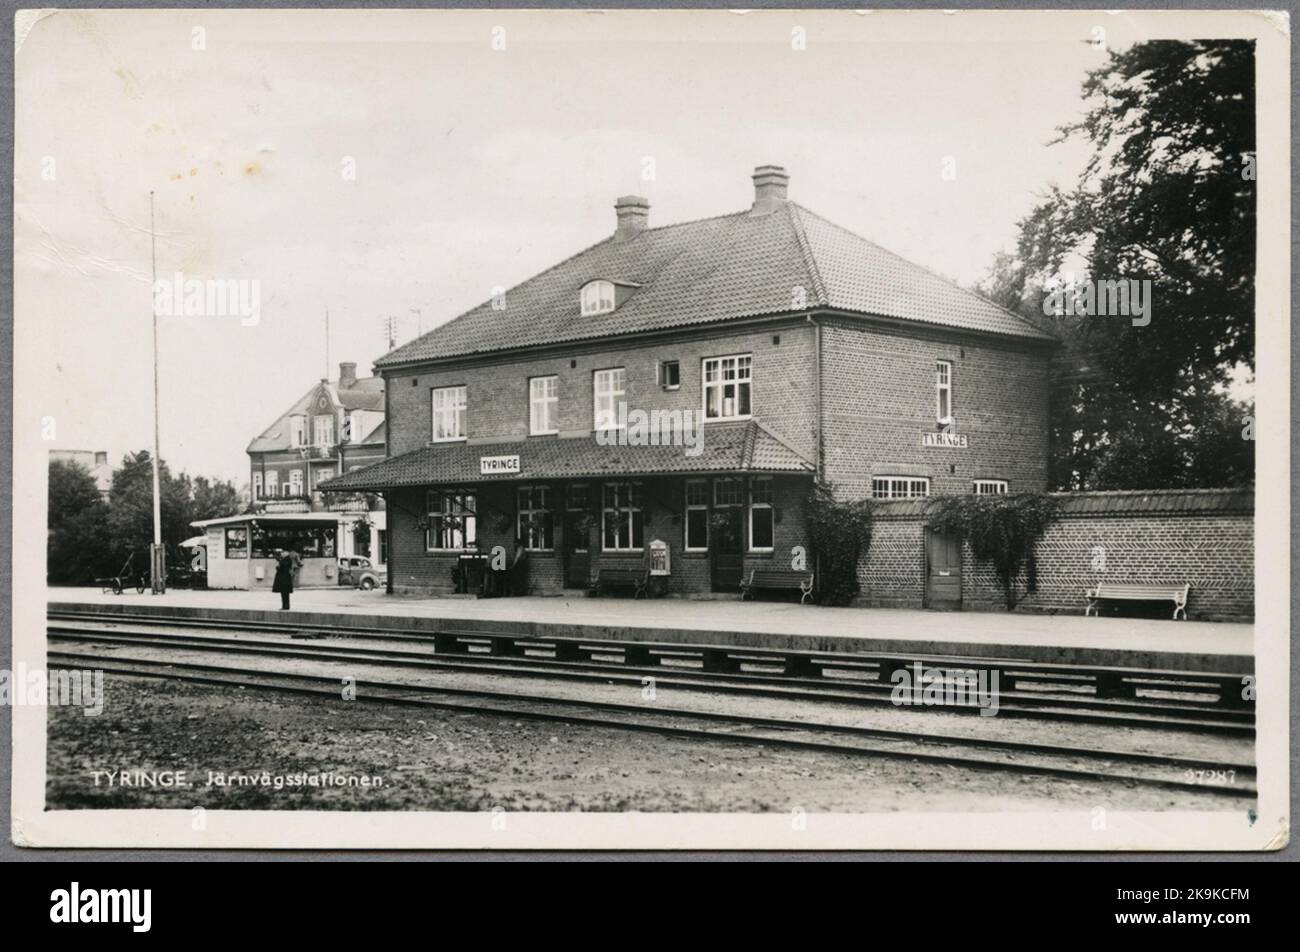 Tyringe railway station. Stock Photo